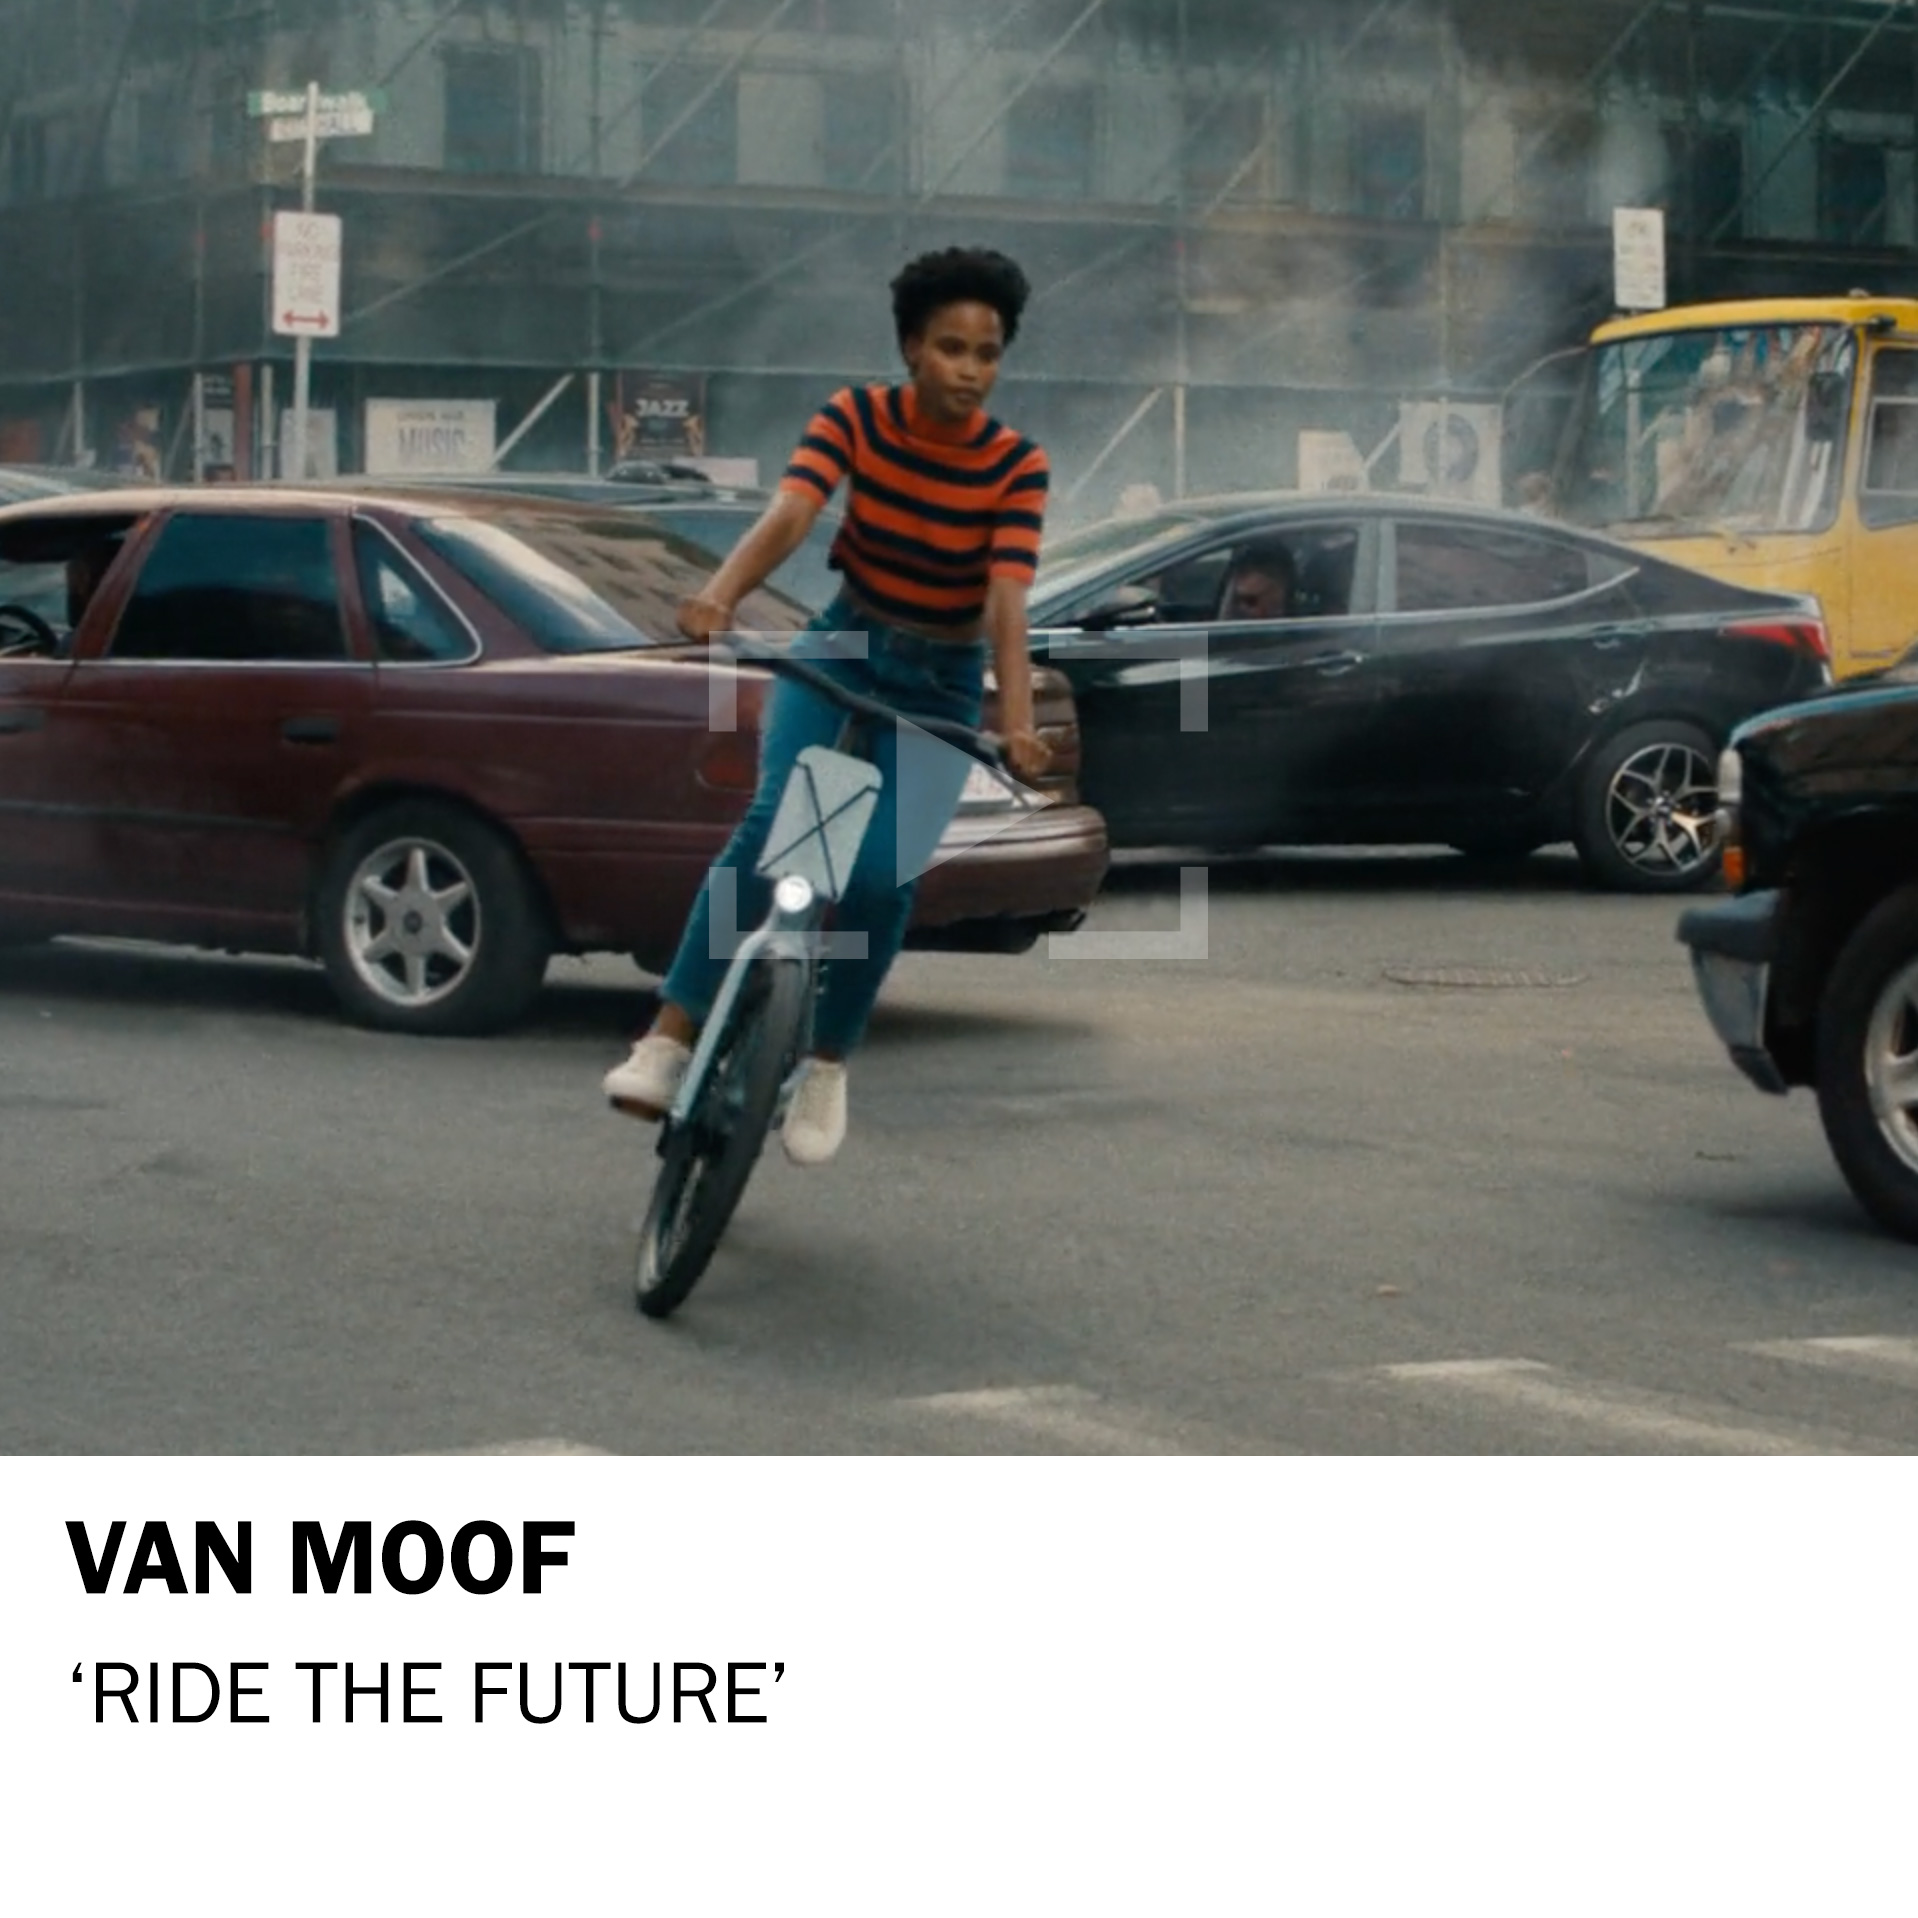 VANMOOF – Ride the Future